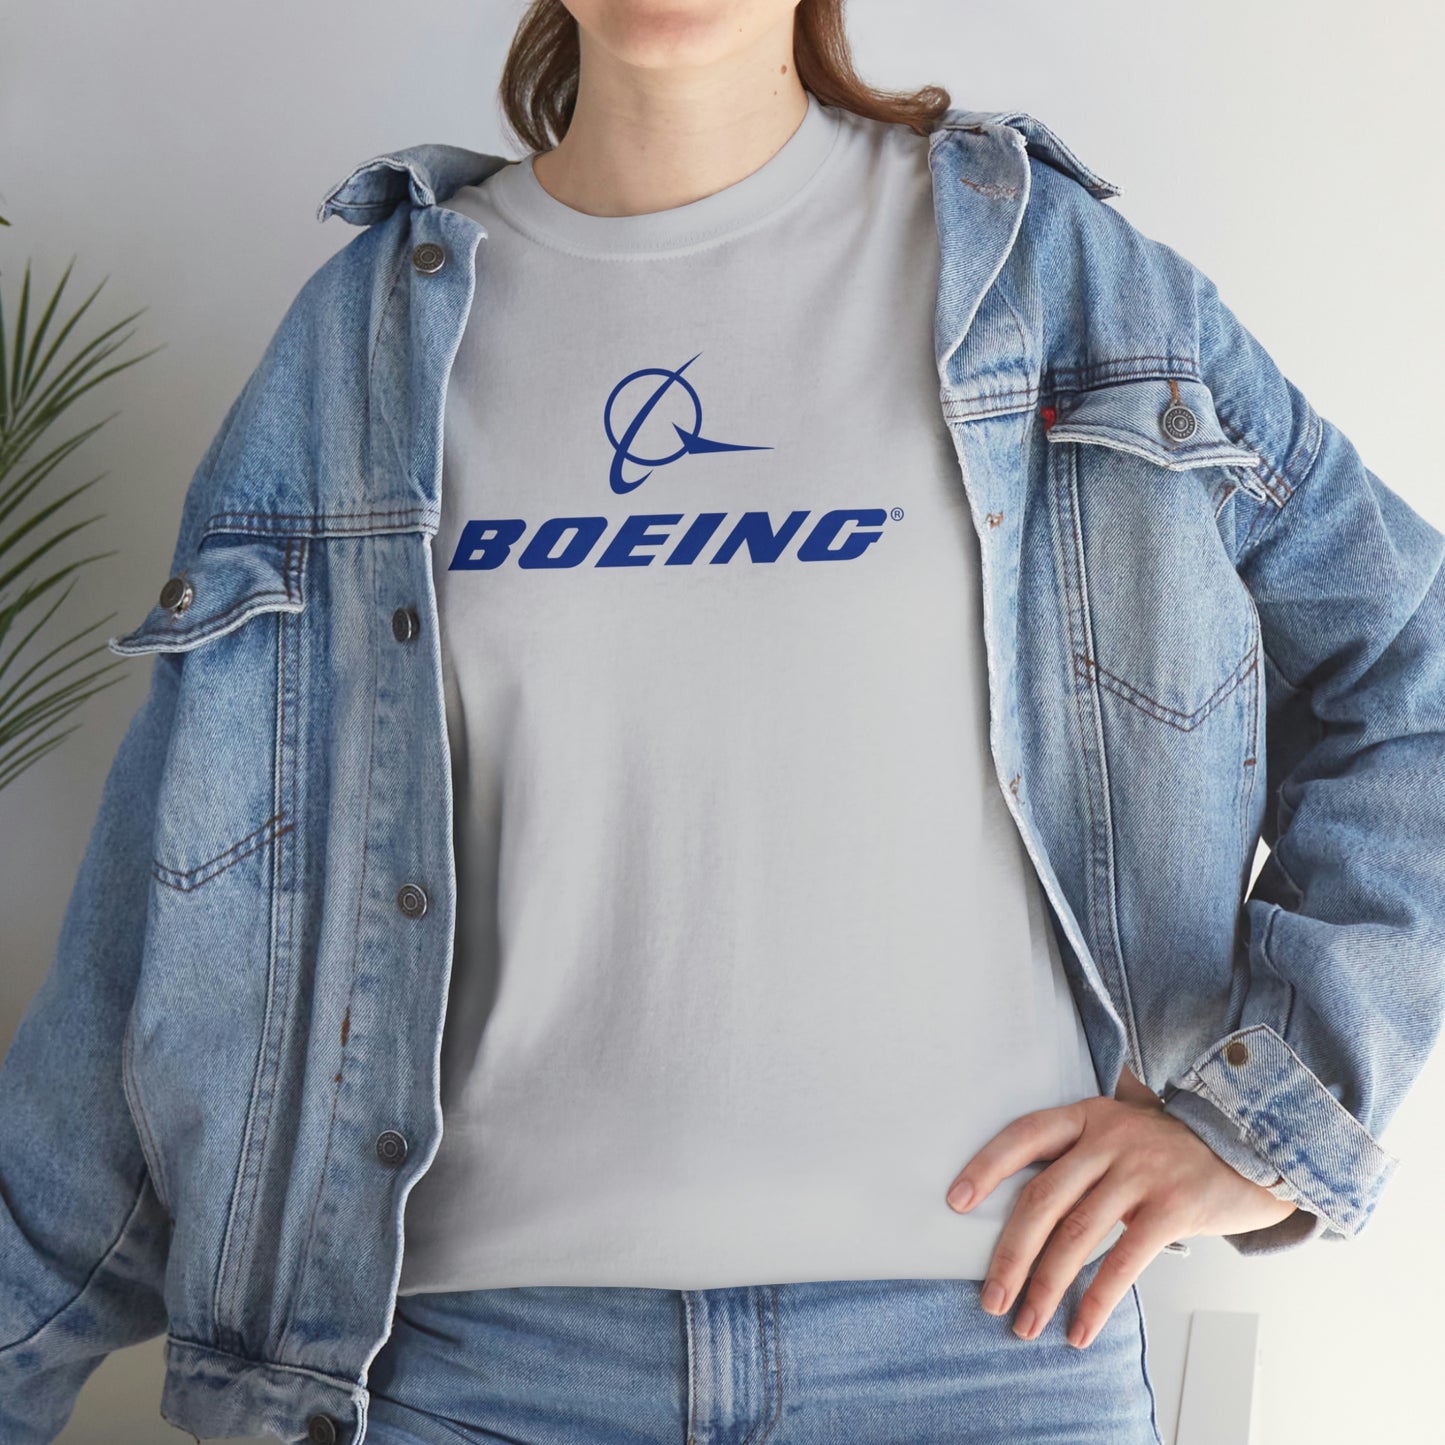 Boeing T-Shirt